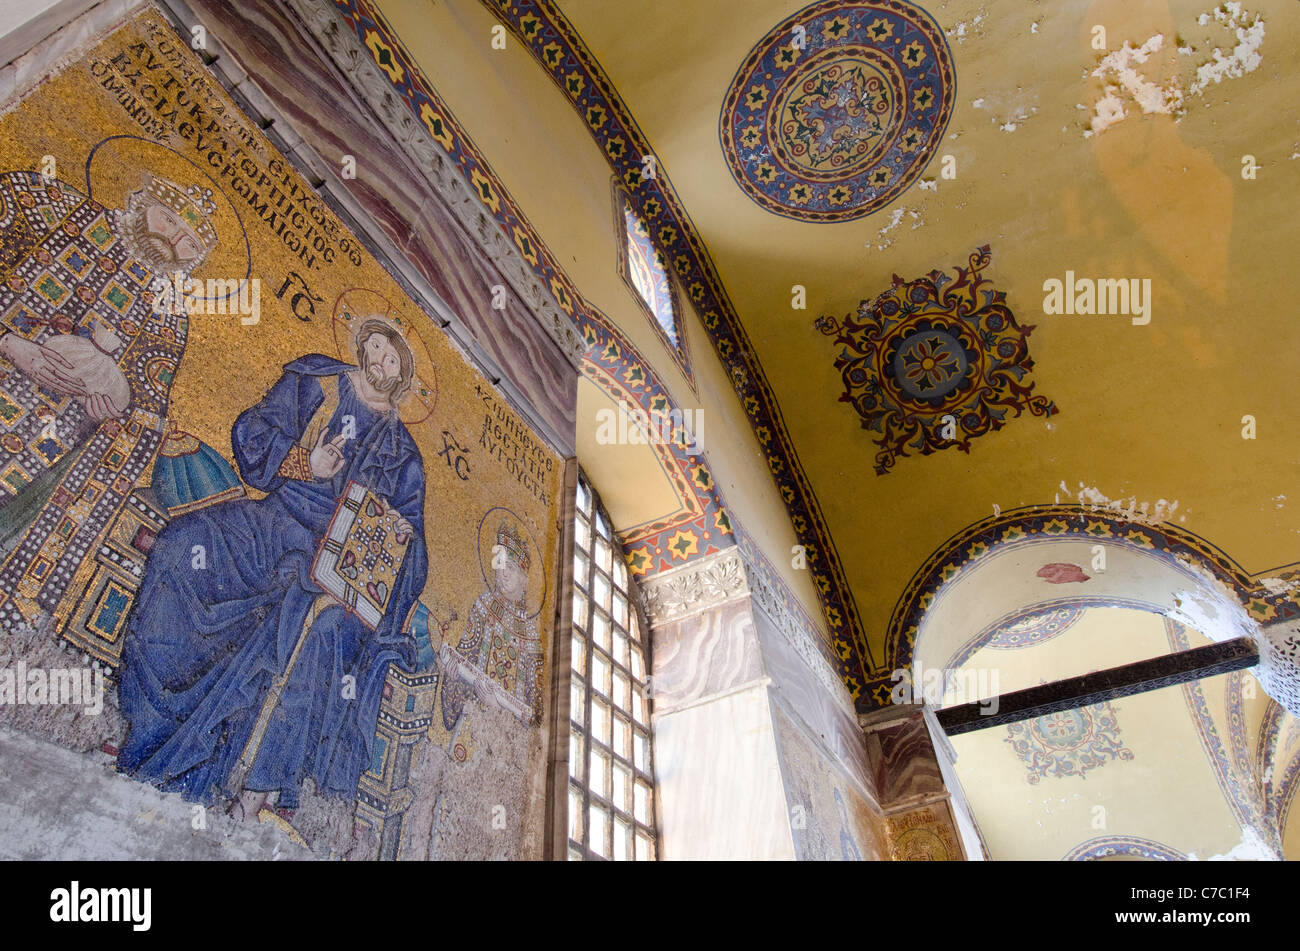 Turkey, Istanbul, Hagia Sophia mosque (aka Aya Sophia, St. Sophia, Haghia Sophia), interior mosaics. Stock Photo